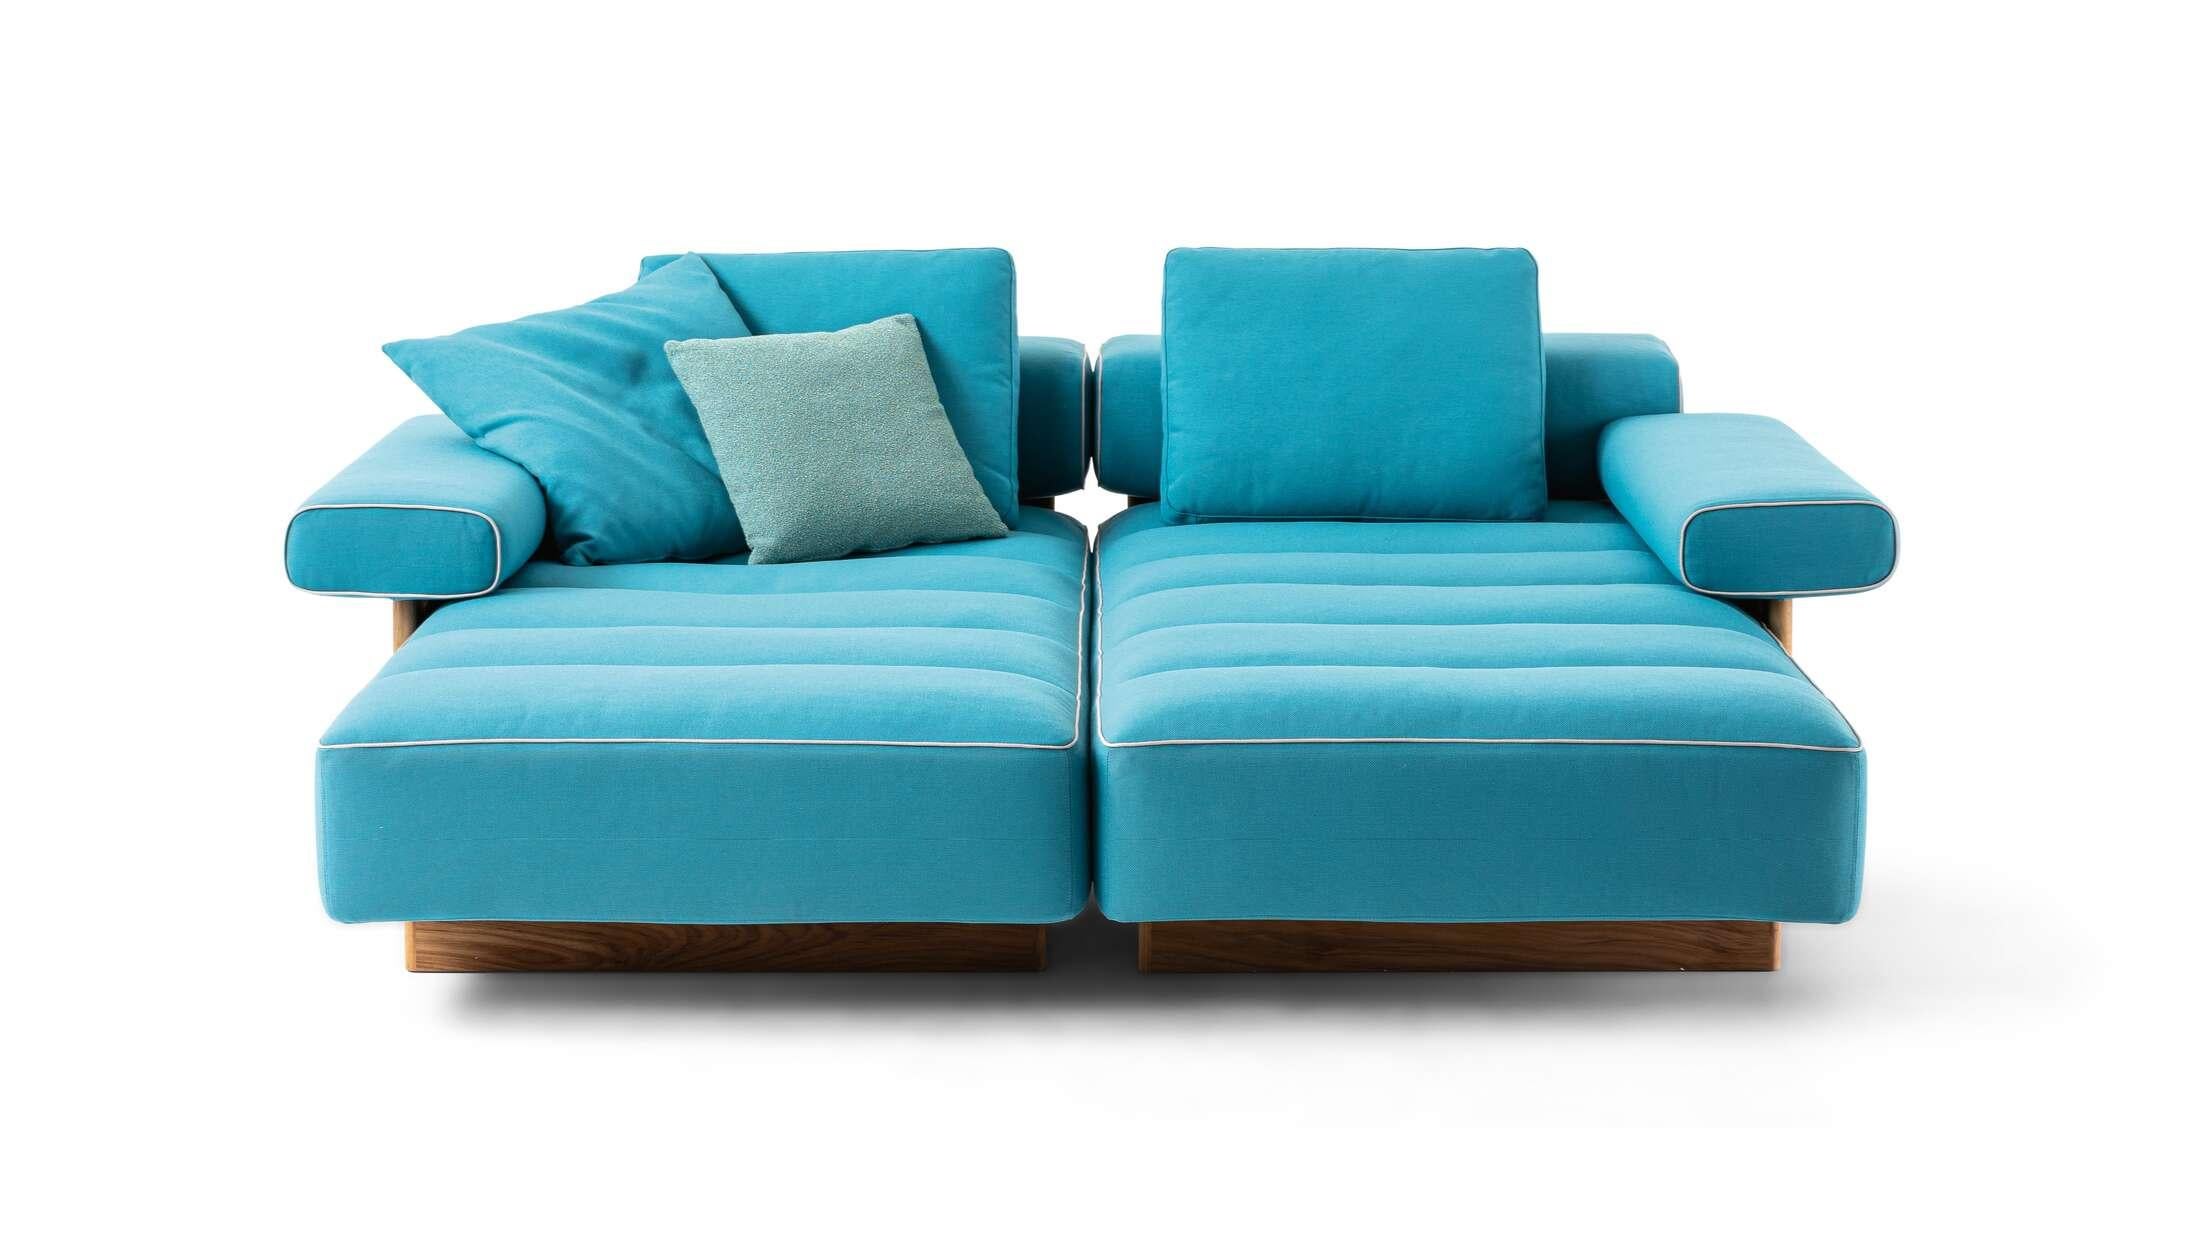 Contemporary Rodolfo Dordoni 'Sail Out' Outdoor Sofa for Cassina in white, purple or blue  For Sale